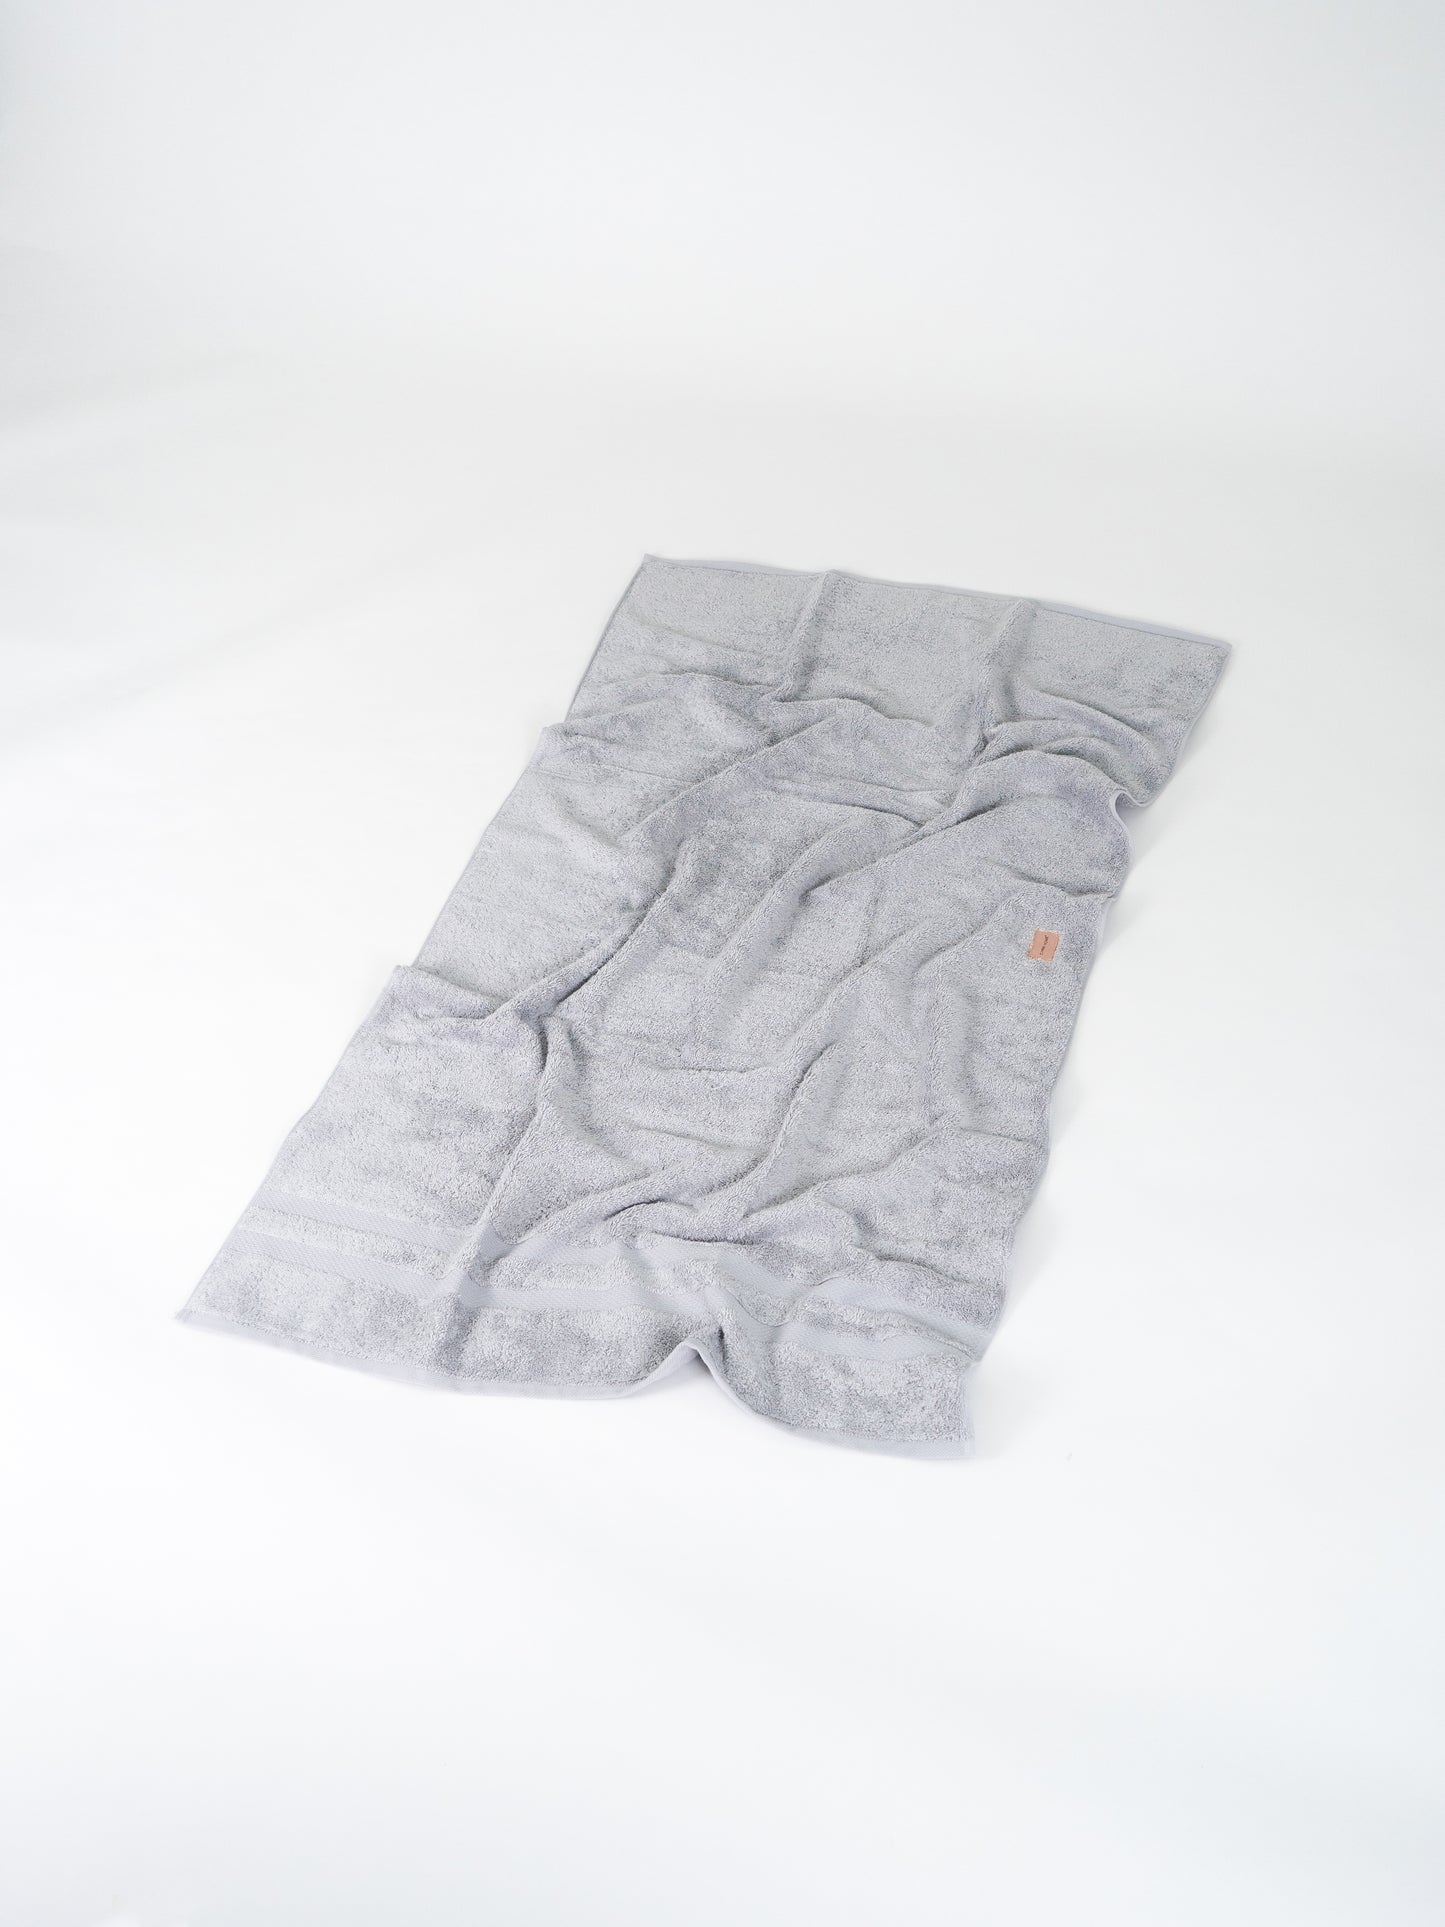 Towel - Off Grey